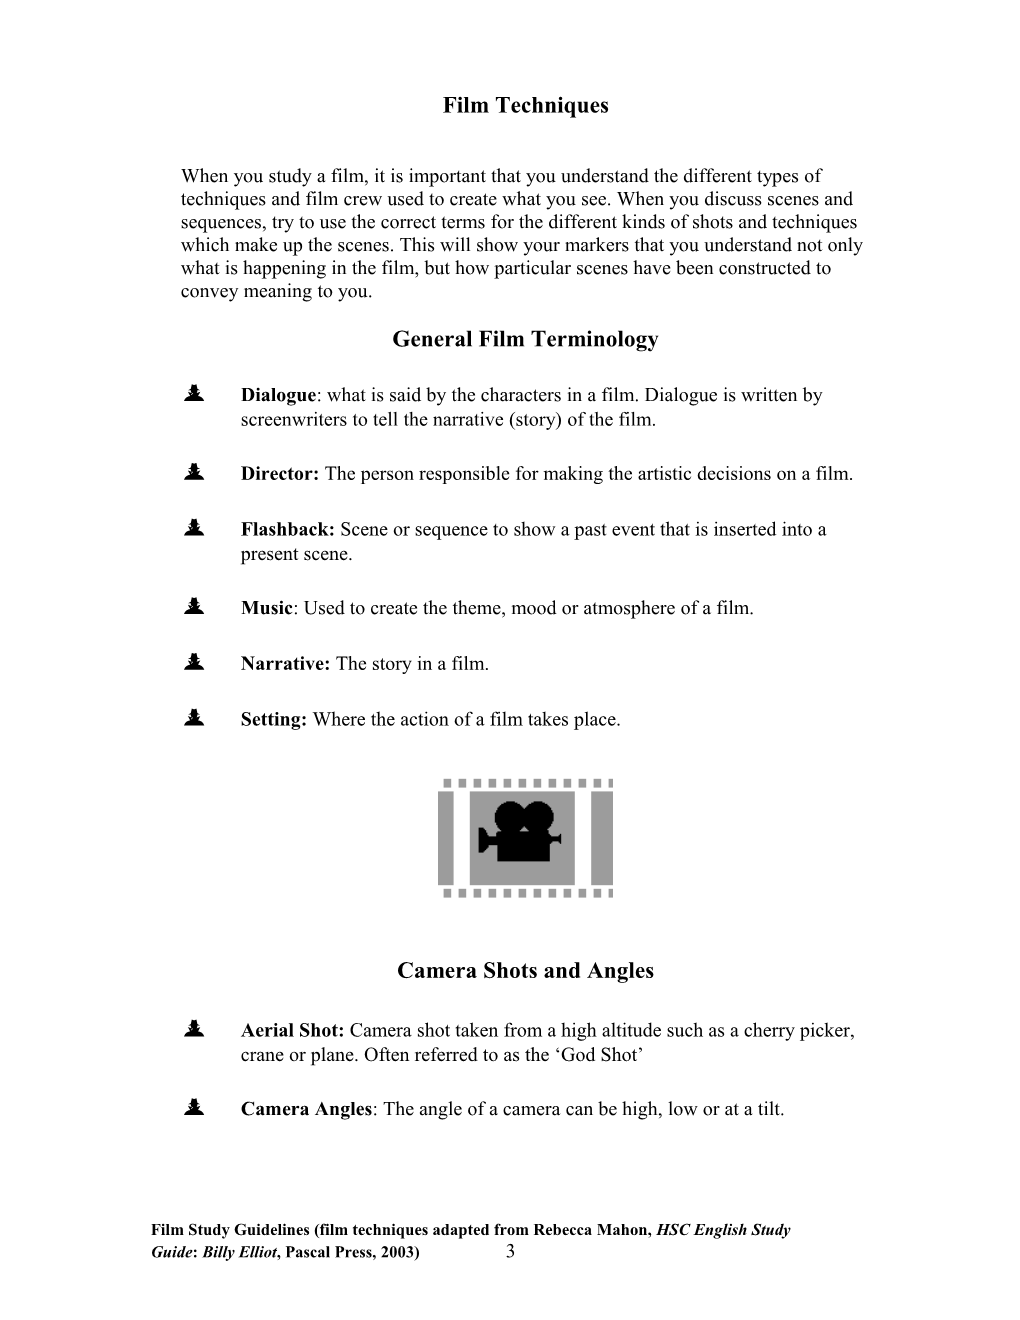 General Film Terminology